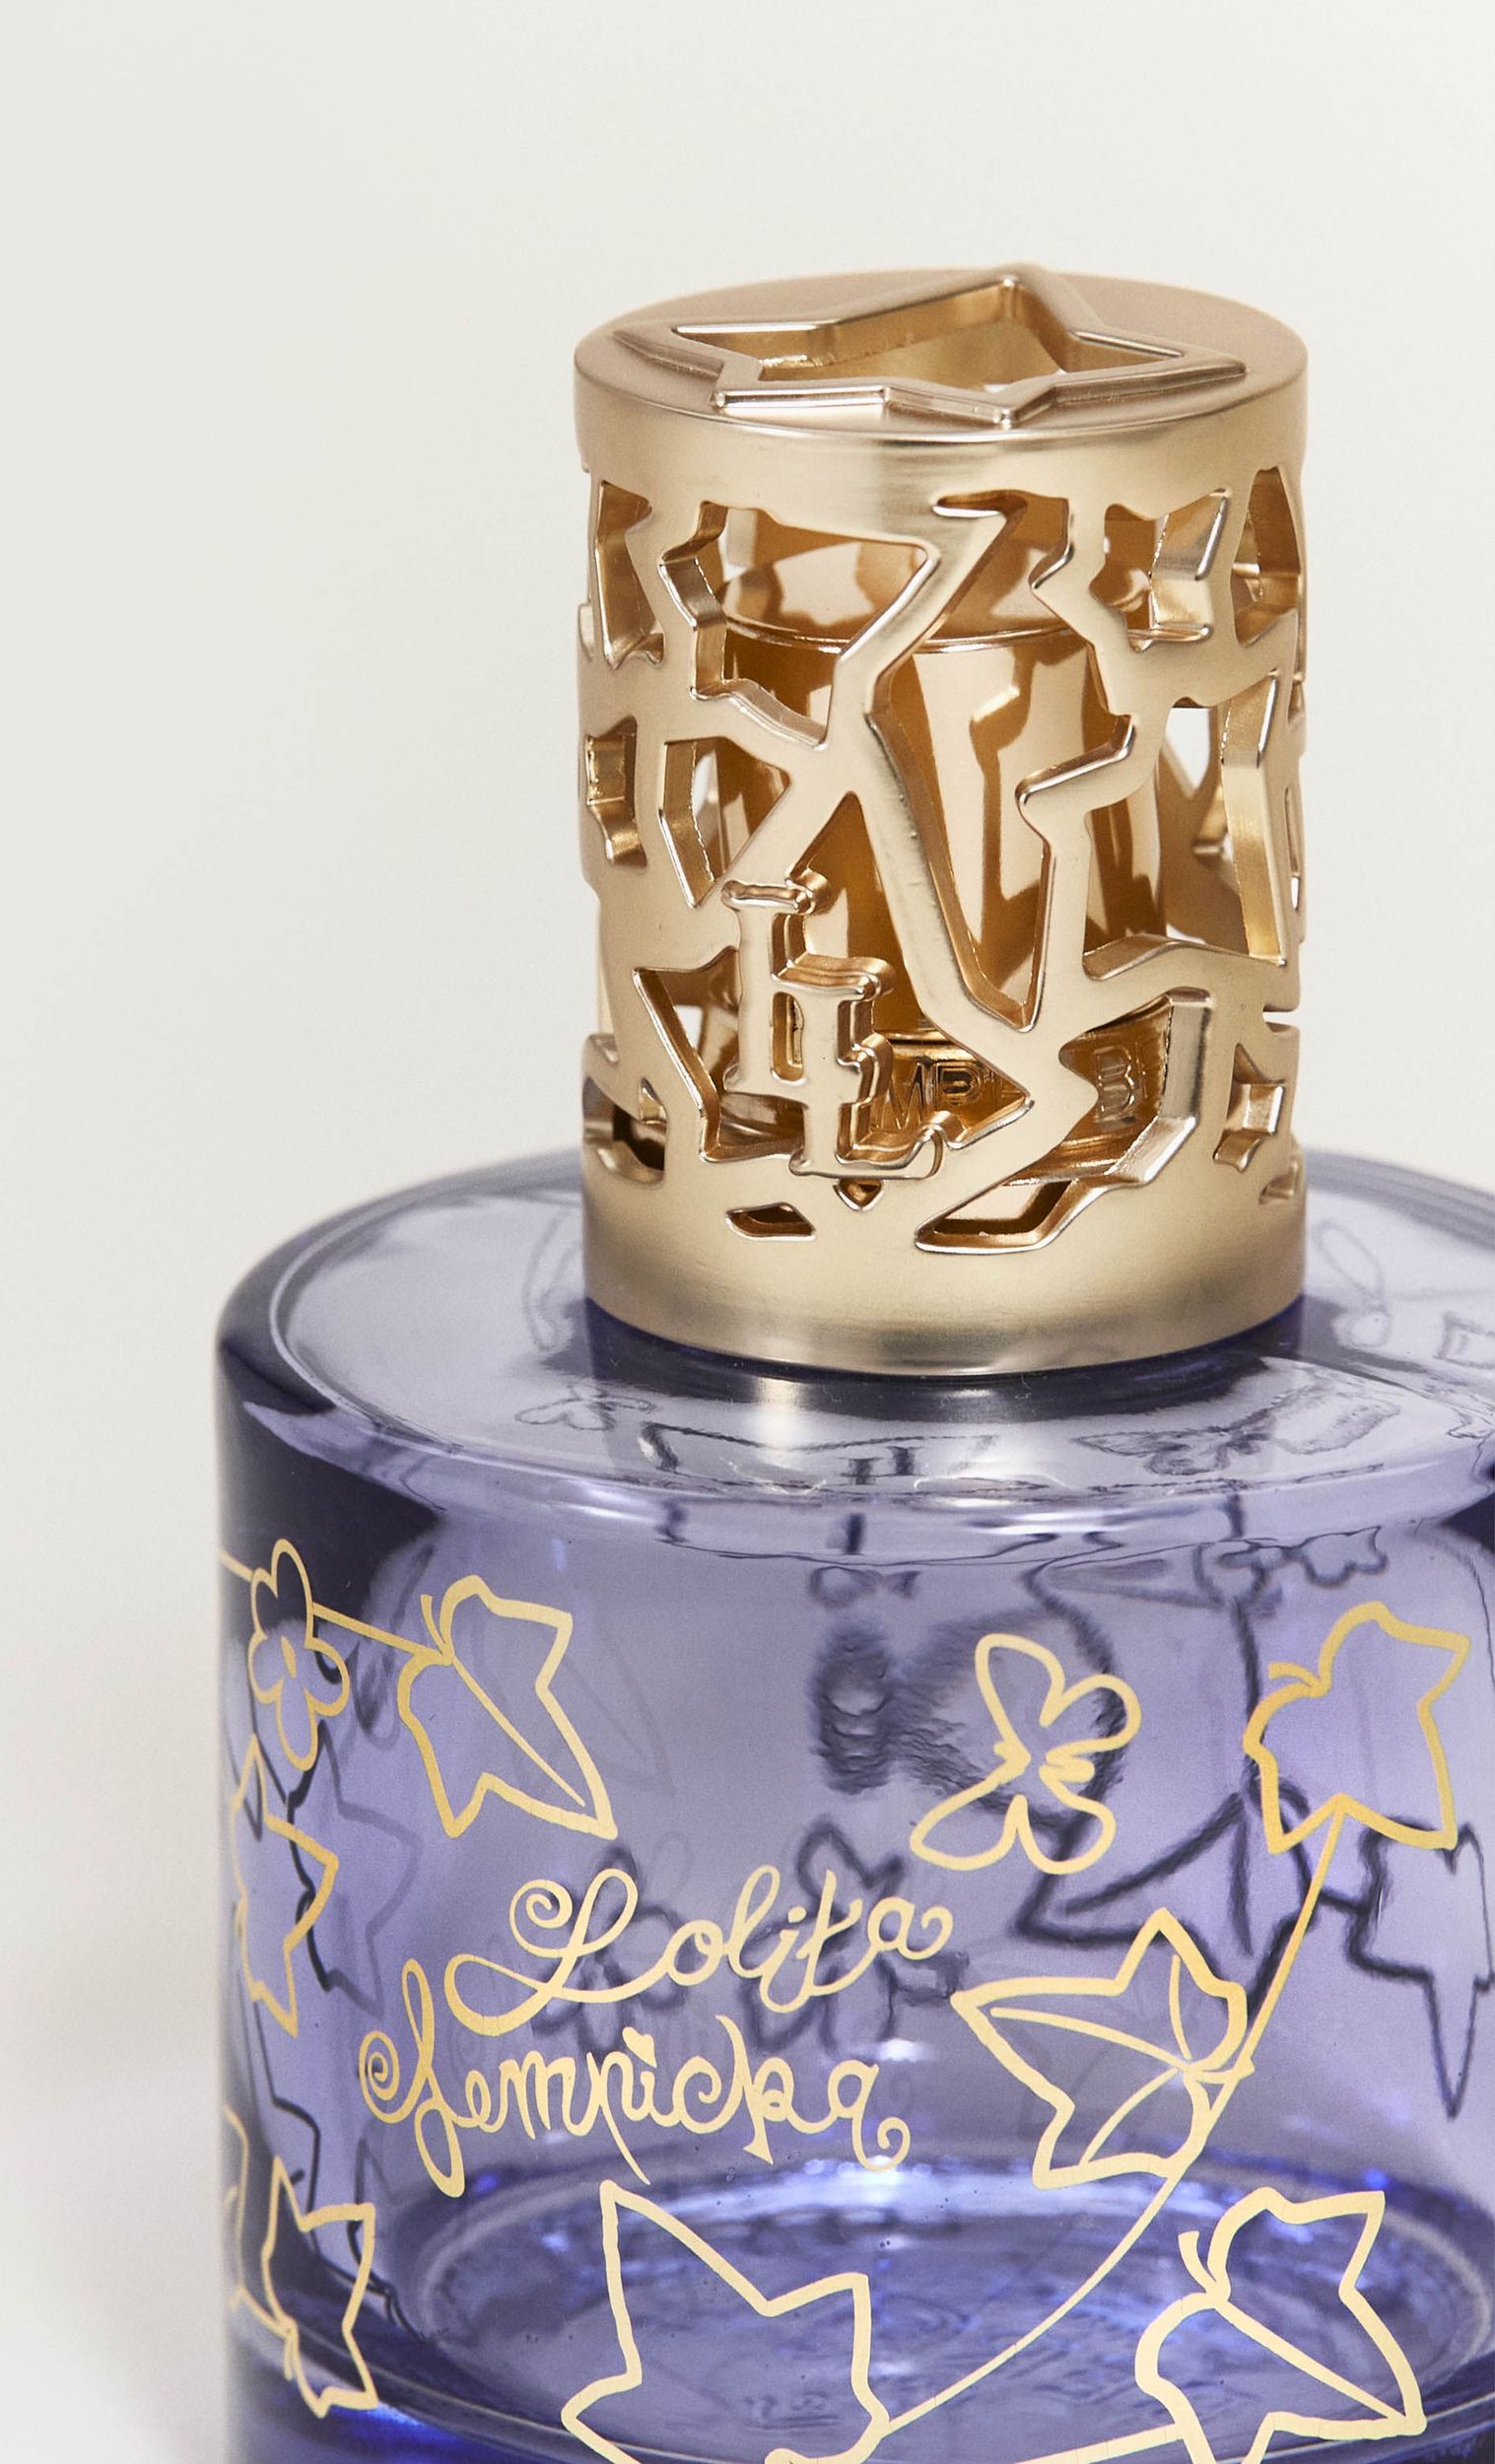 Lolita Catalytic lamp with scent - Maison Berger Paris 4752